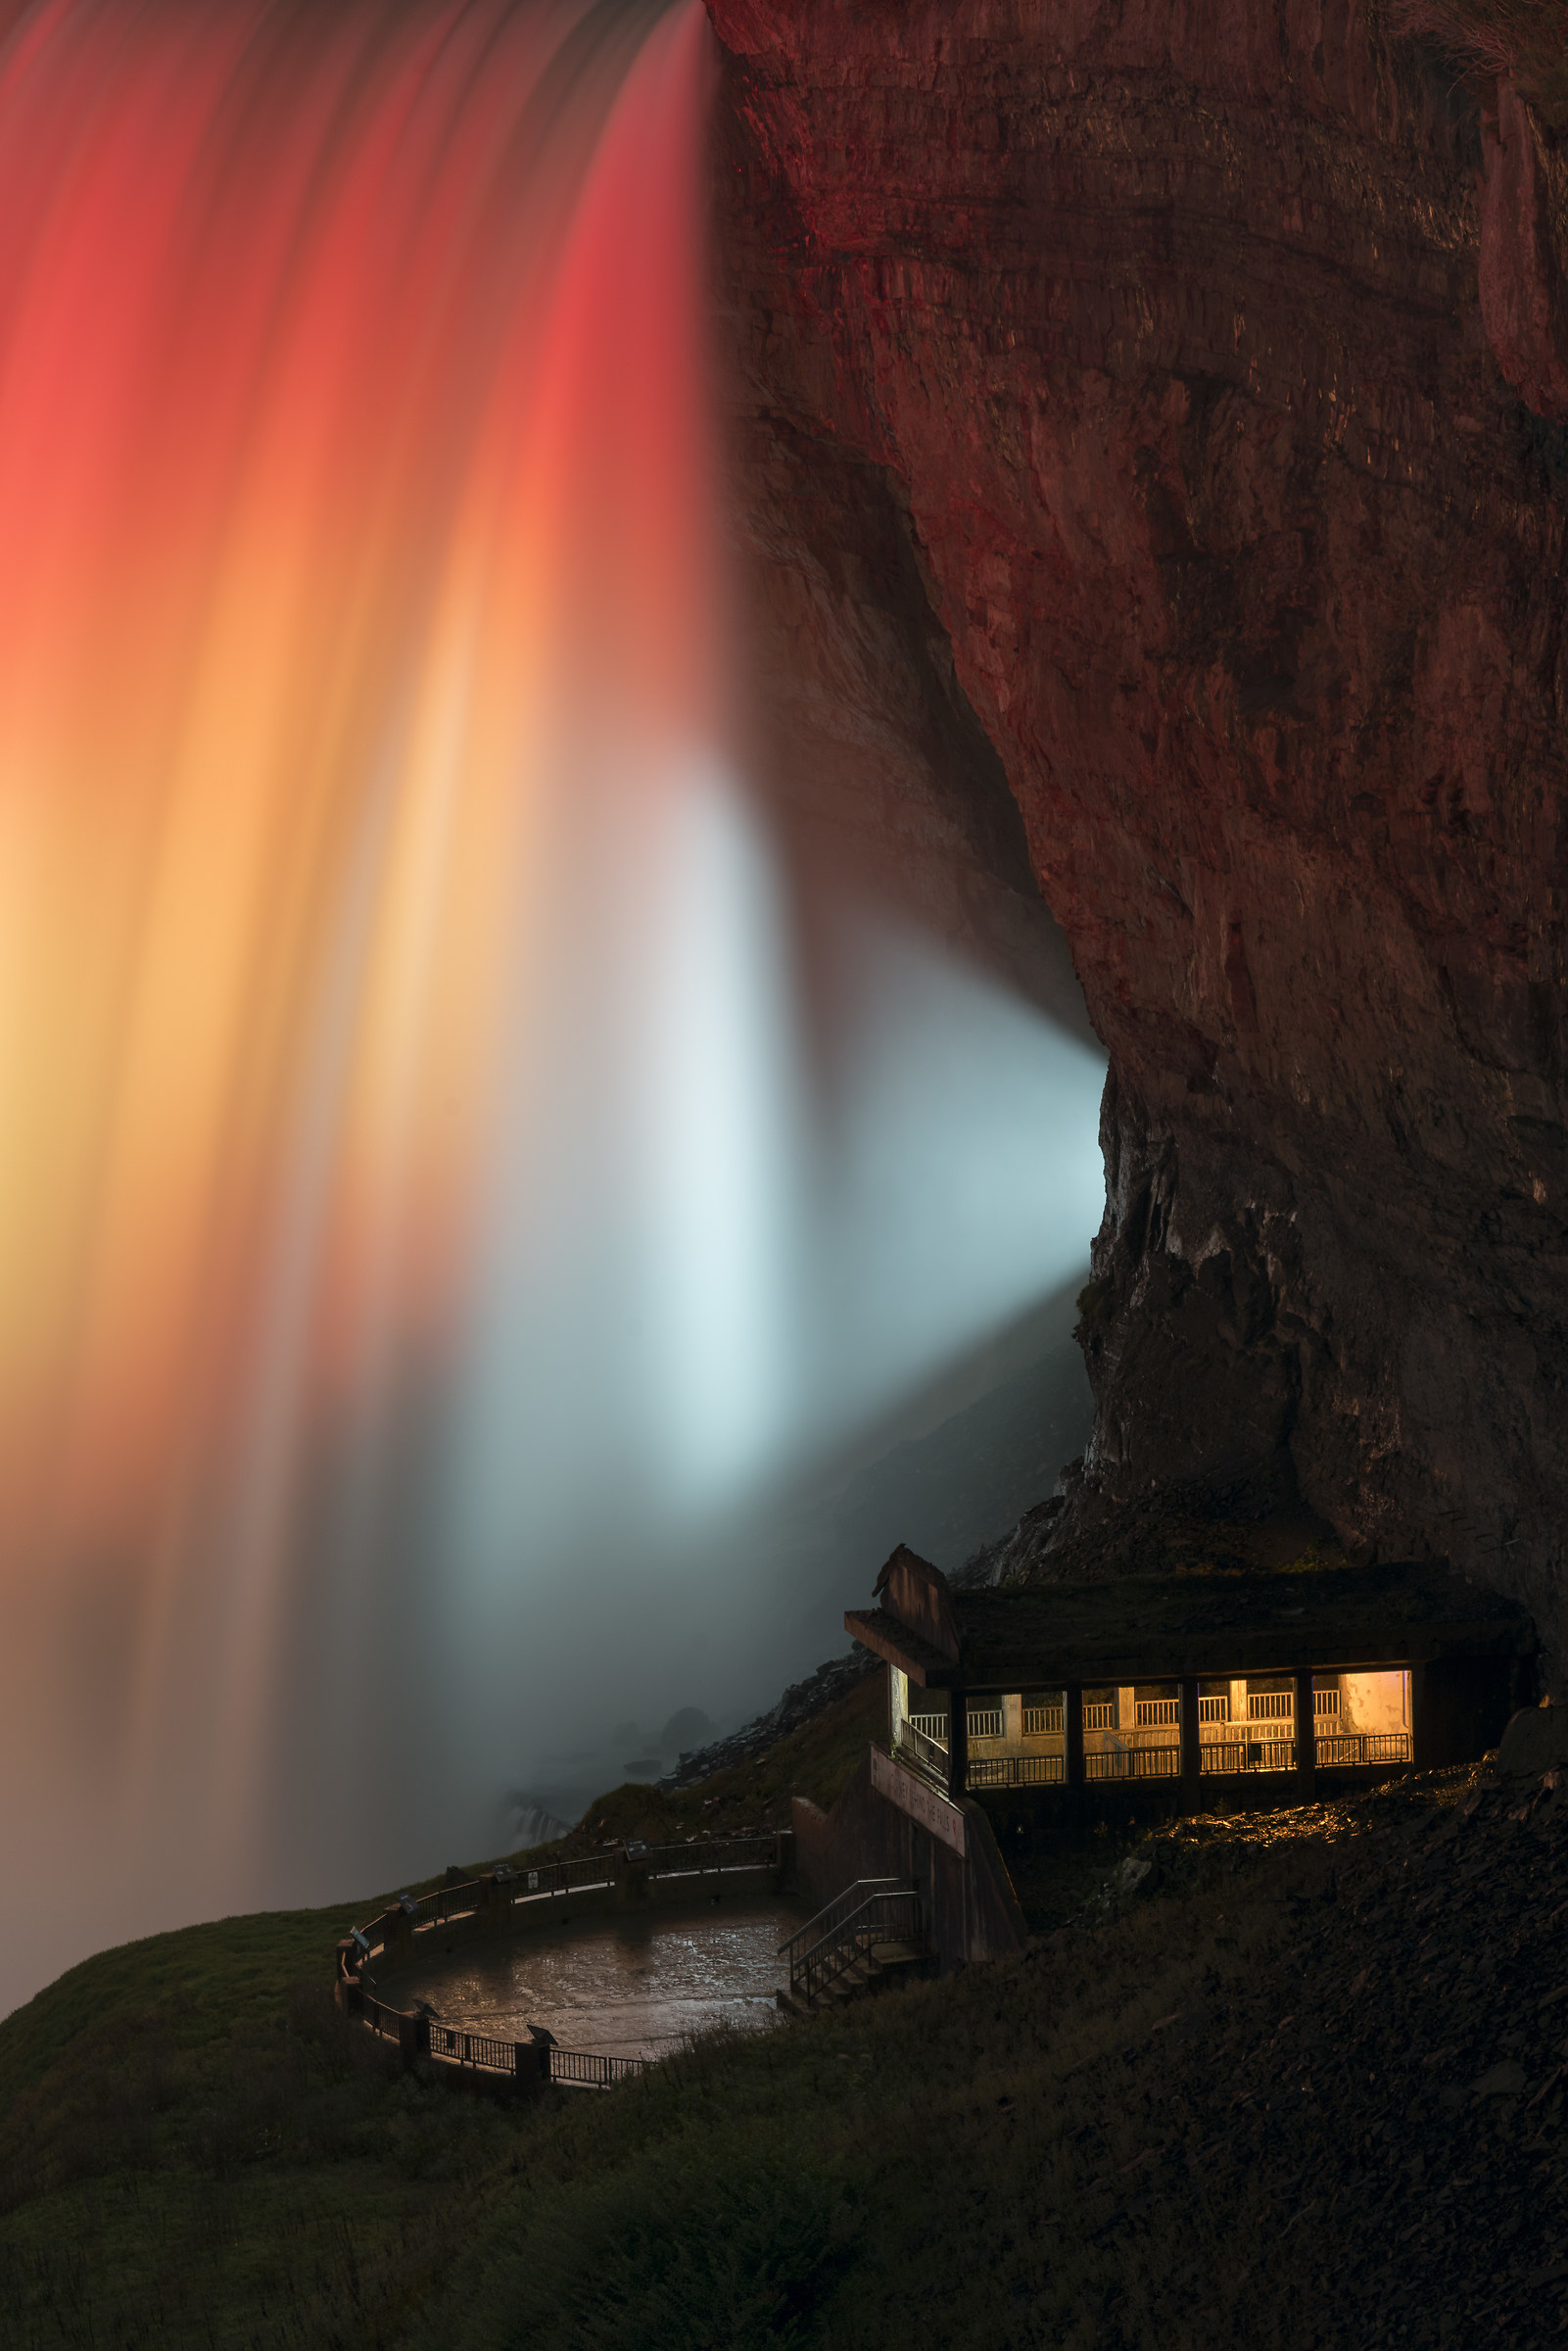  Niagara Falls by Night...